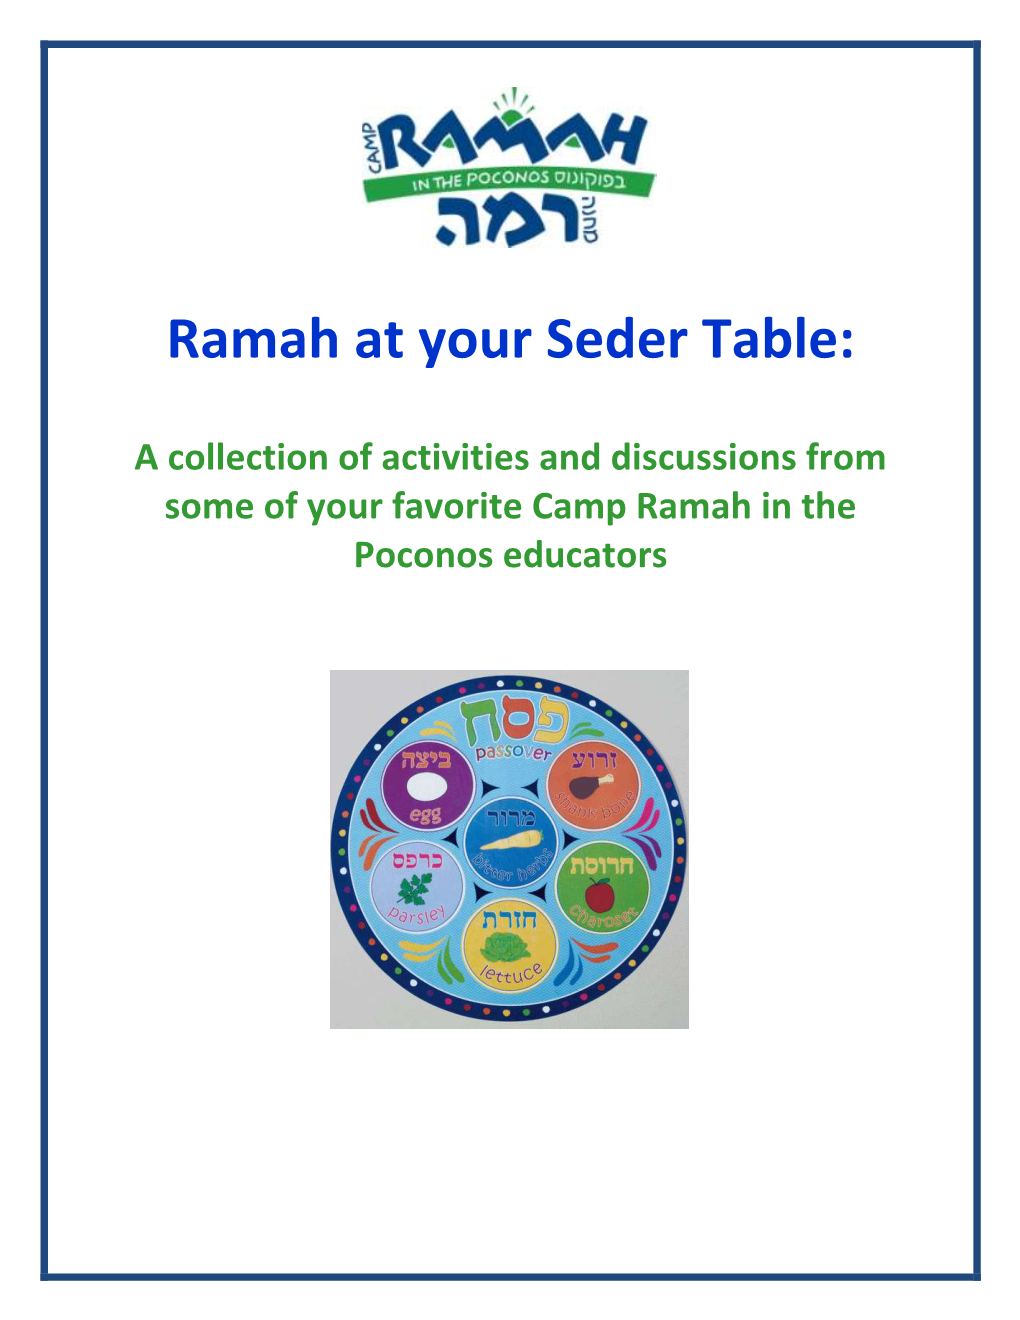 Ramah at Your Seder Table